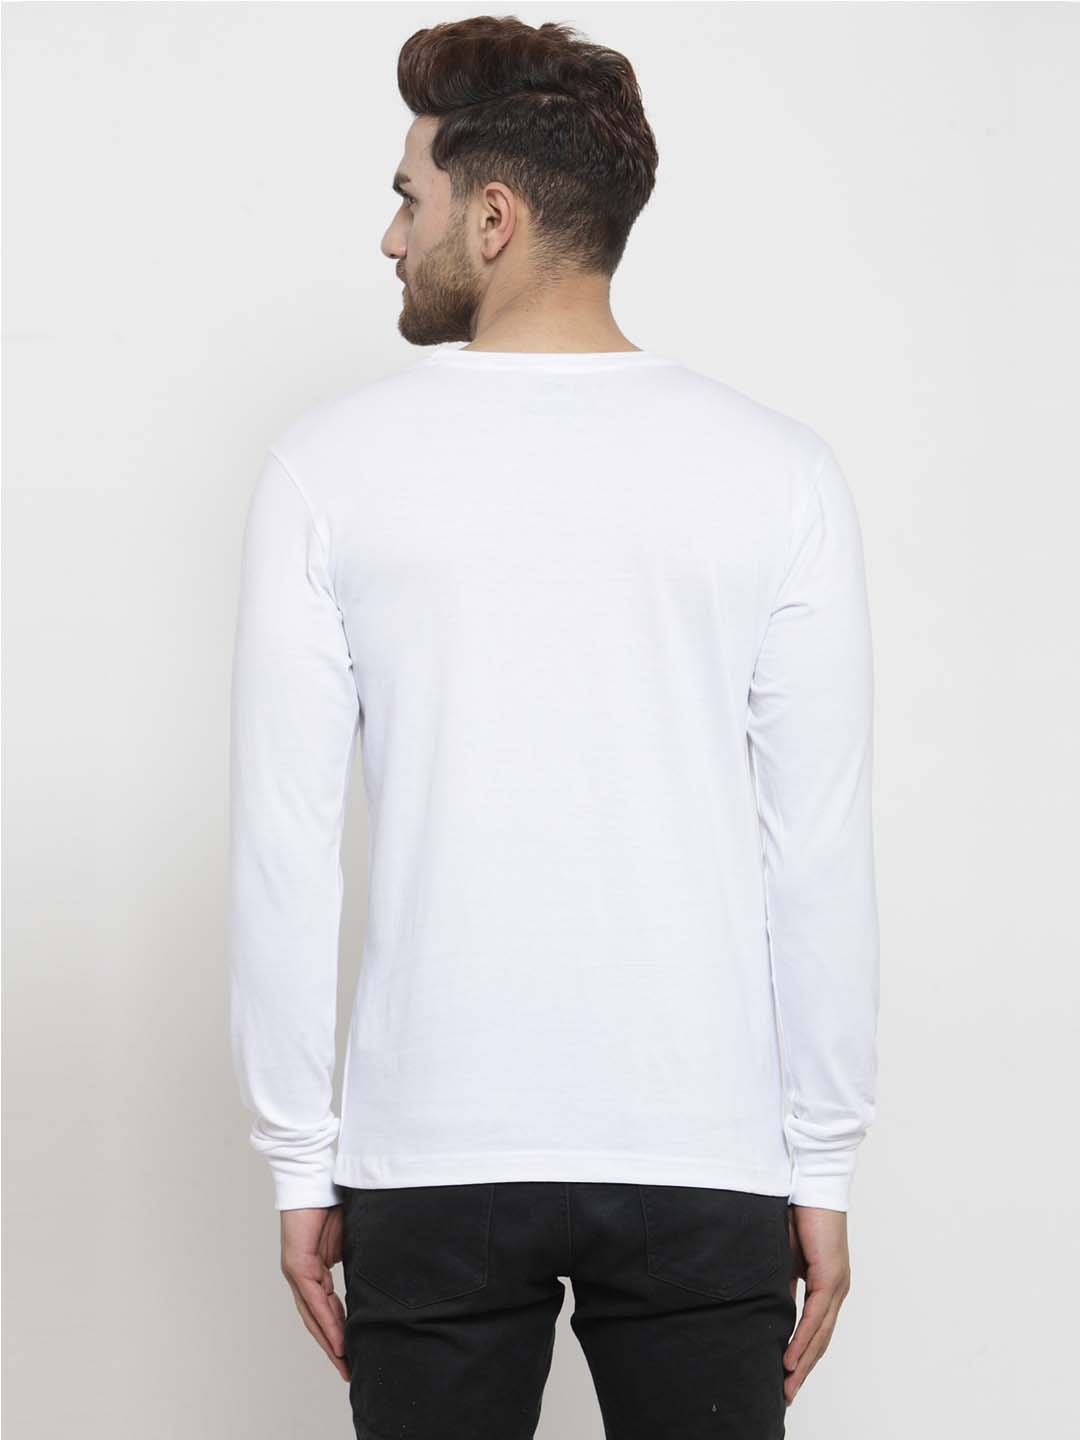 Men Systumm Printed Full Sleeve T-shirt - Friskers